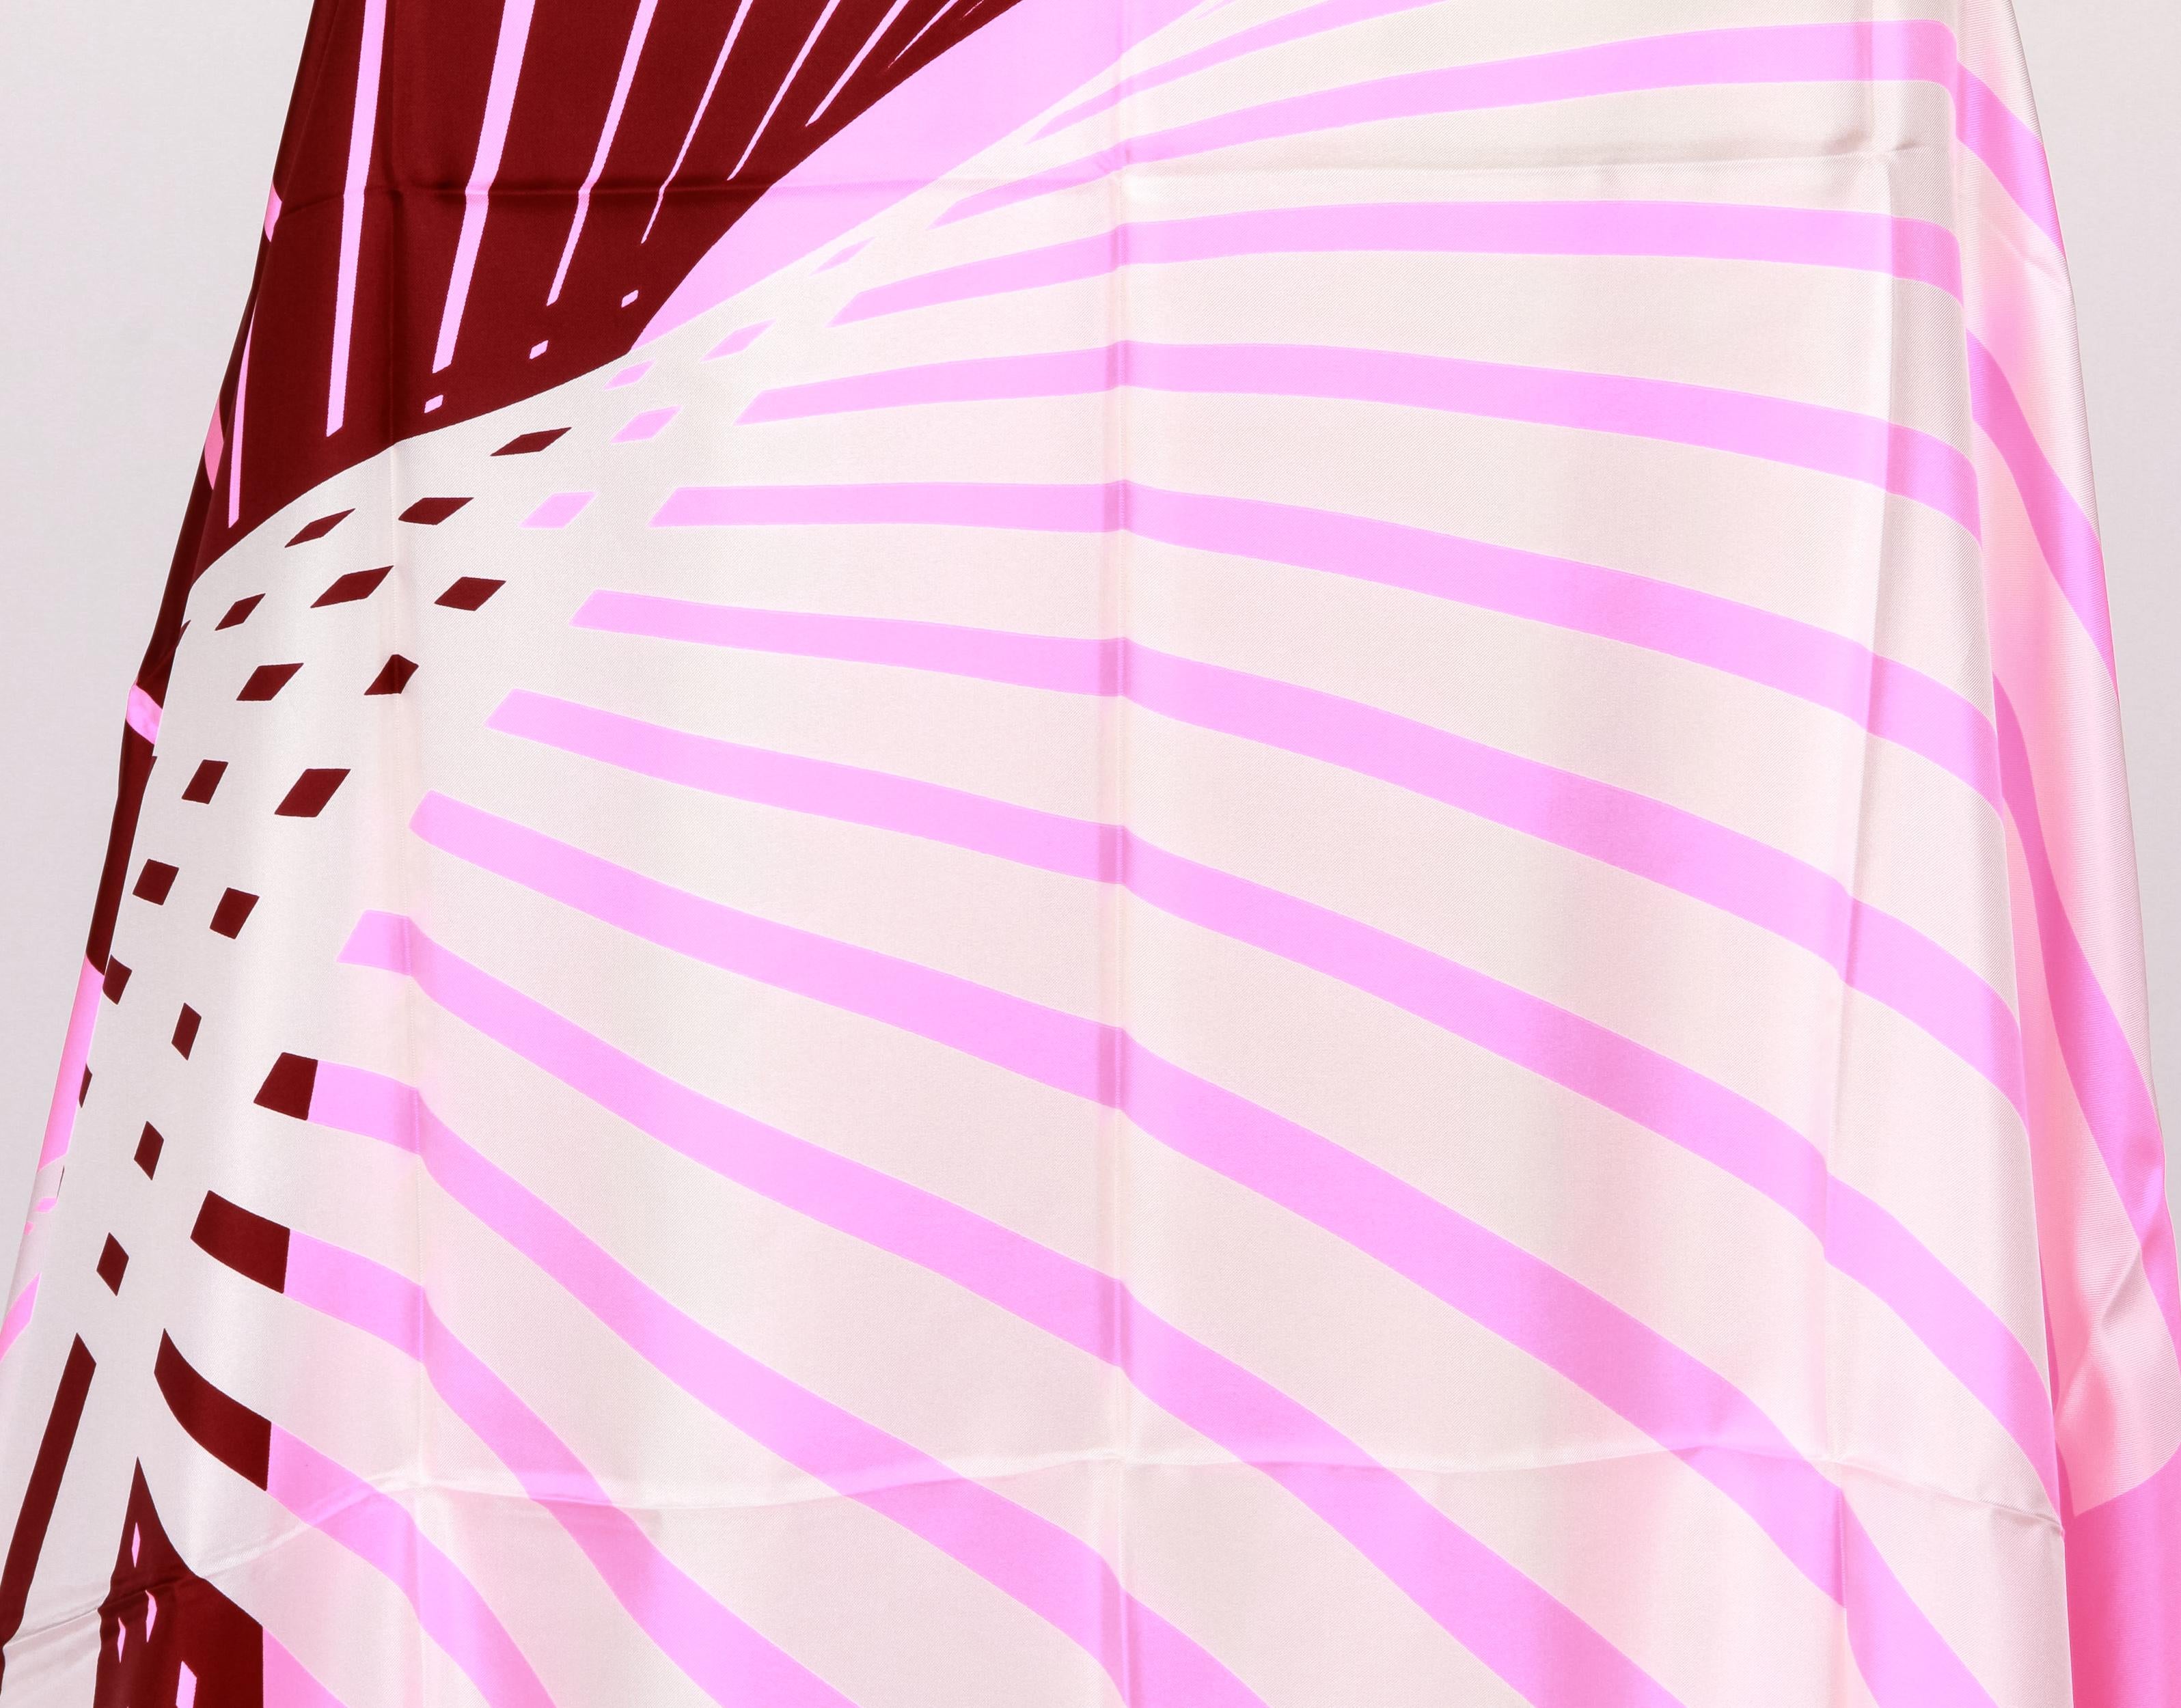 New Dior Oversize Geometric Pink Scarf Shawl
100% Silk
54